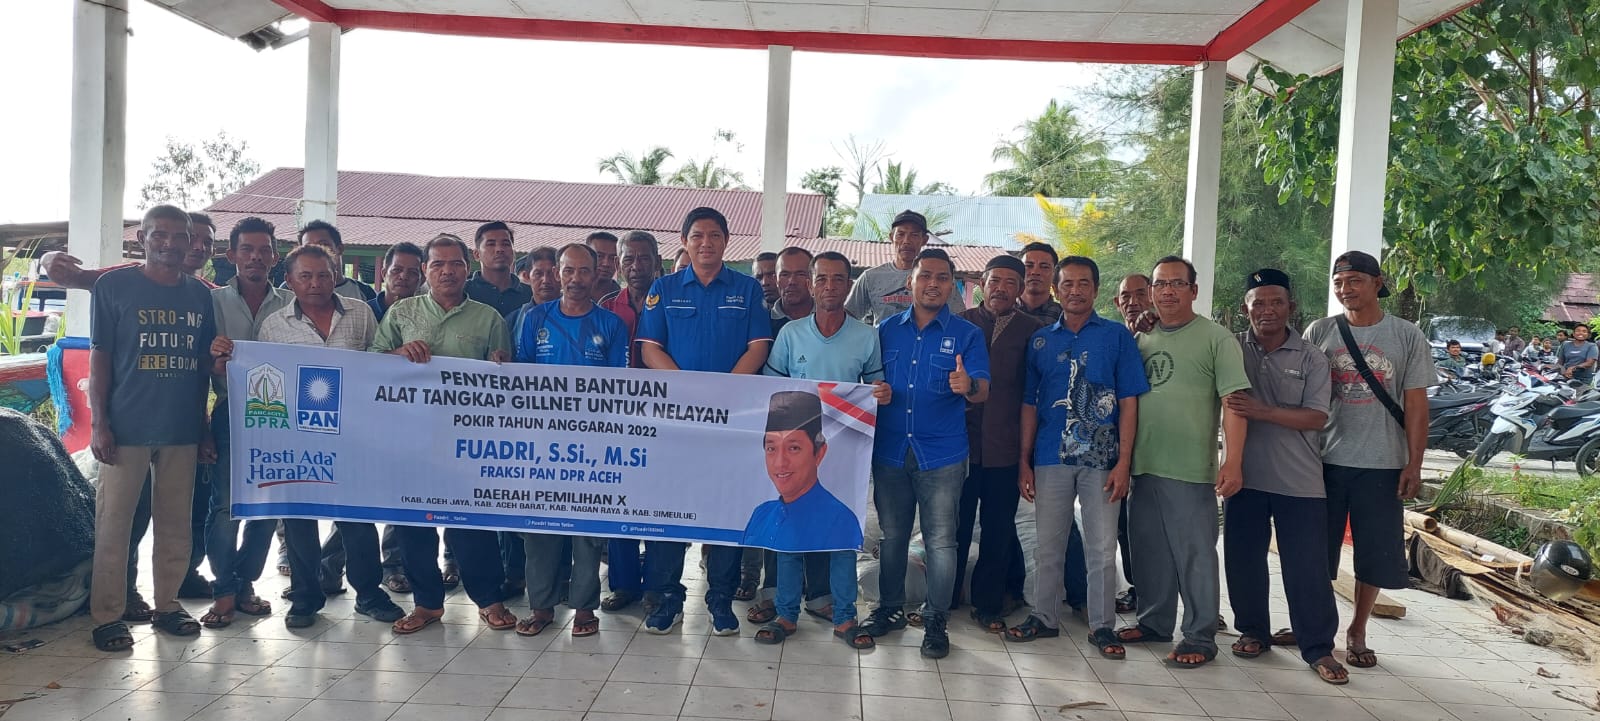 Sebanyak 247 Nelayan di Wilayah Lhok Meureubo mendapatkan Bantuan Alat Tangkap dari Pemerintah Aceh melalui Pokir DPRA Fuadri,S.Si.,M.Si